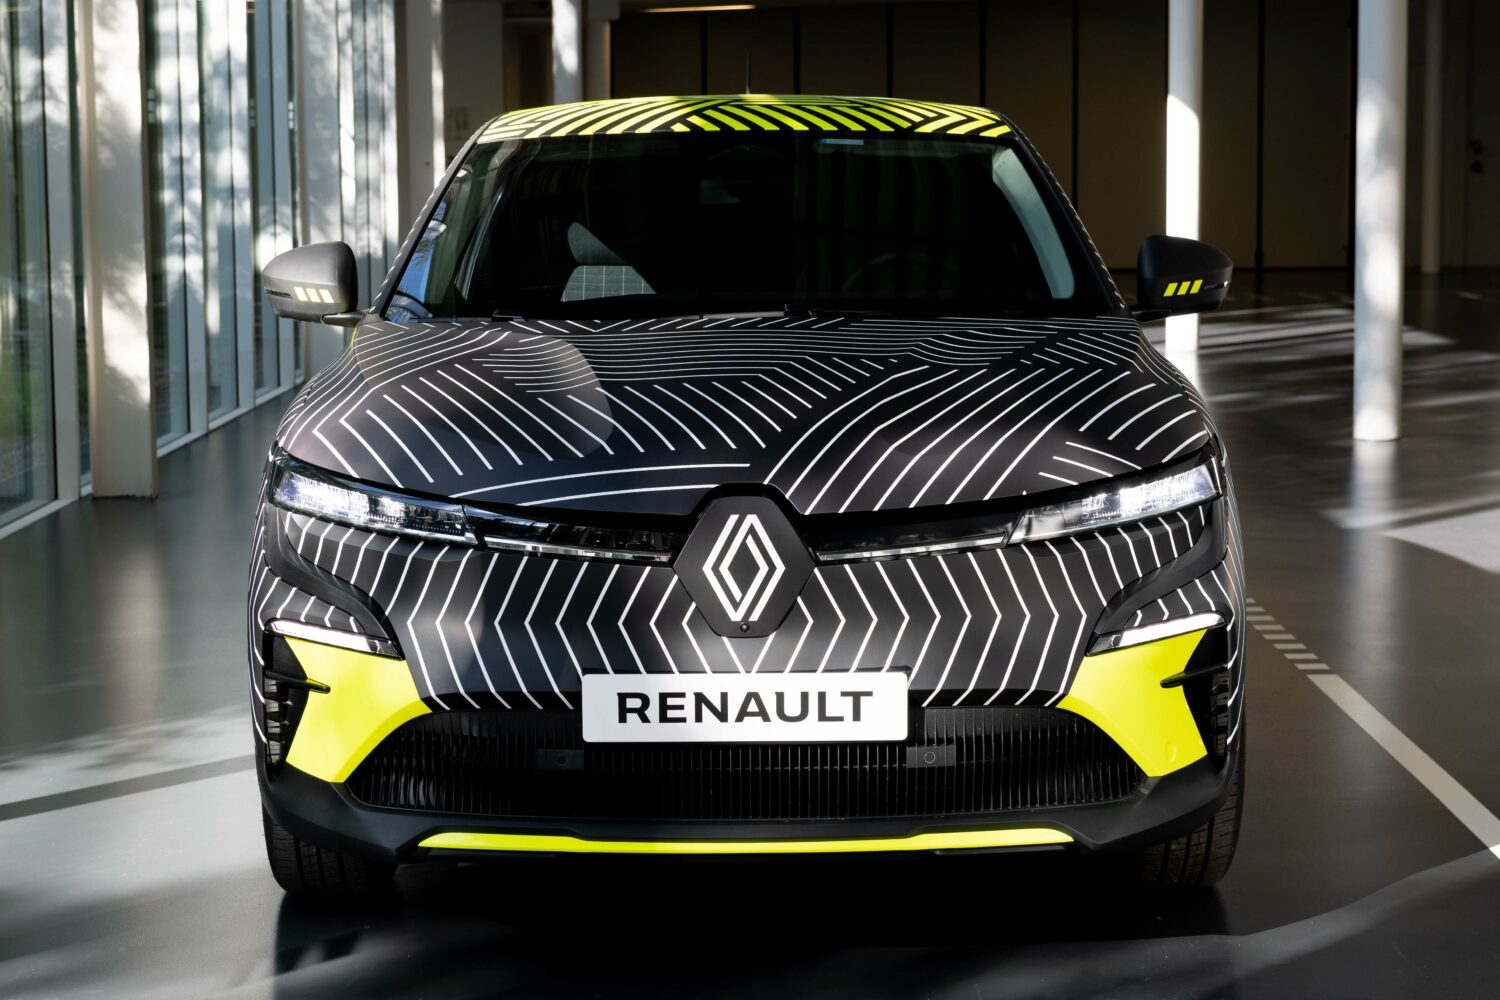 2021 - New Renault MEGANE E-TECH Electric pre-production